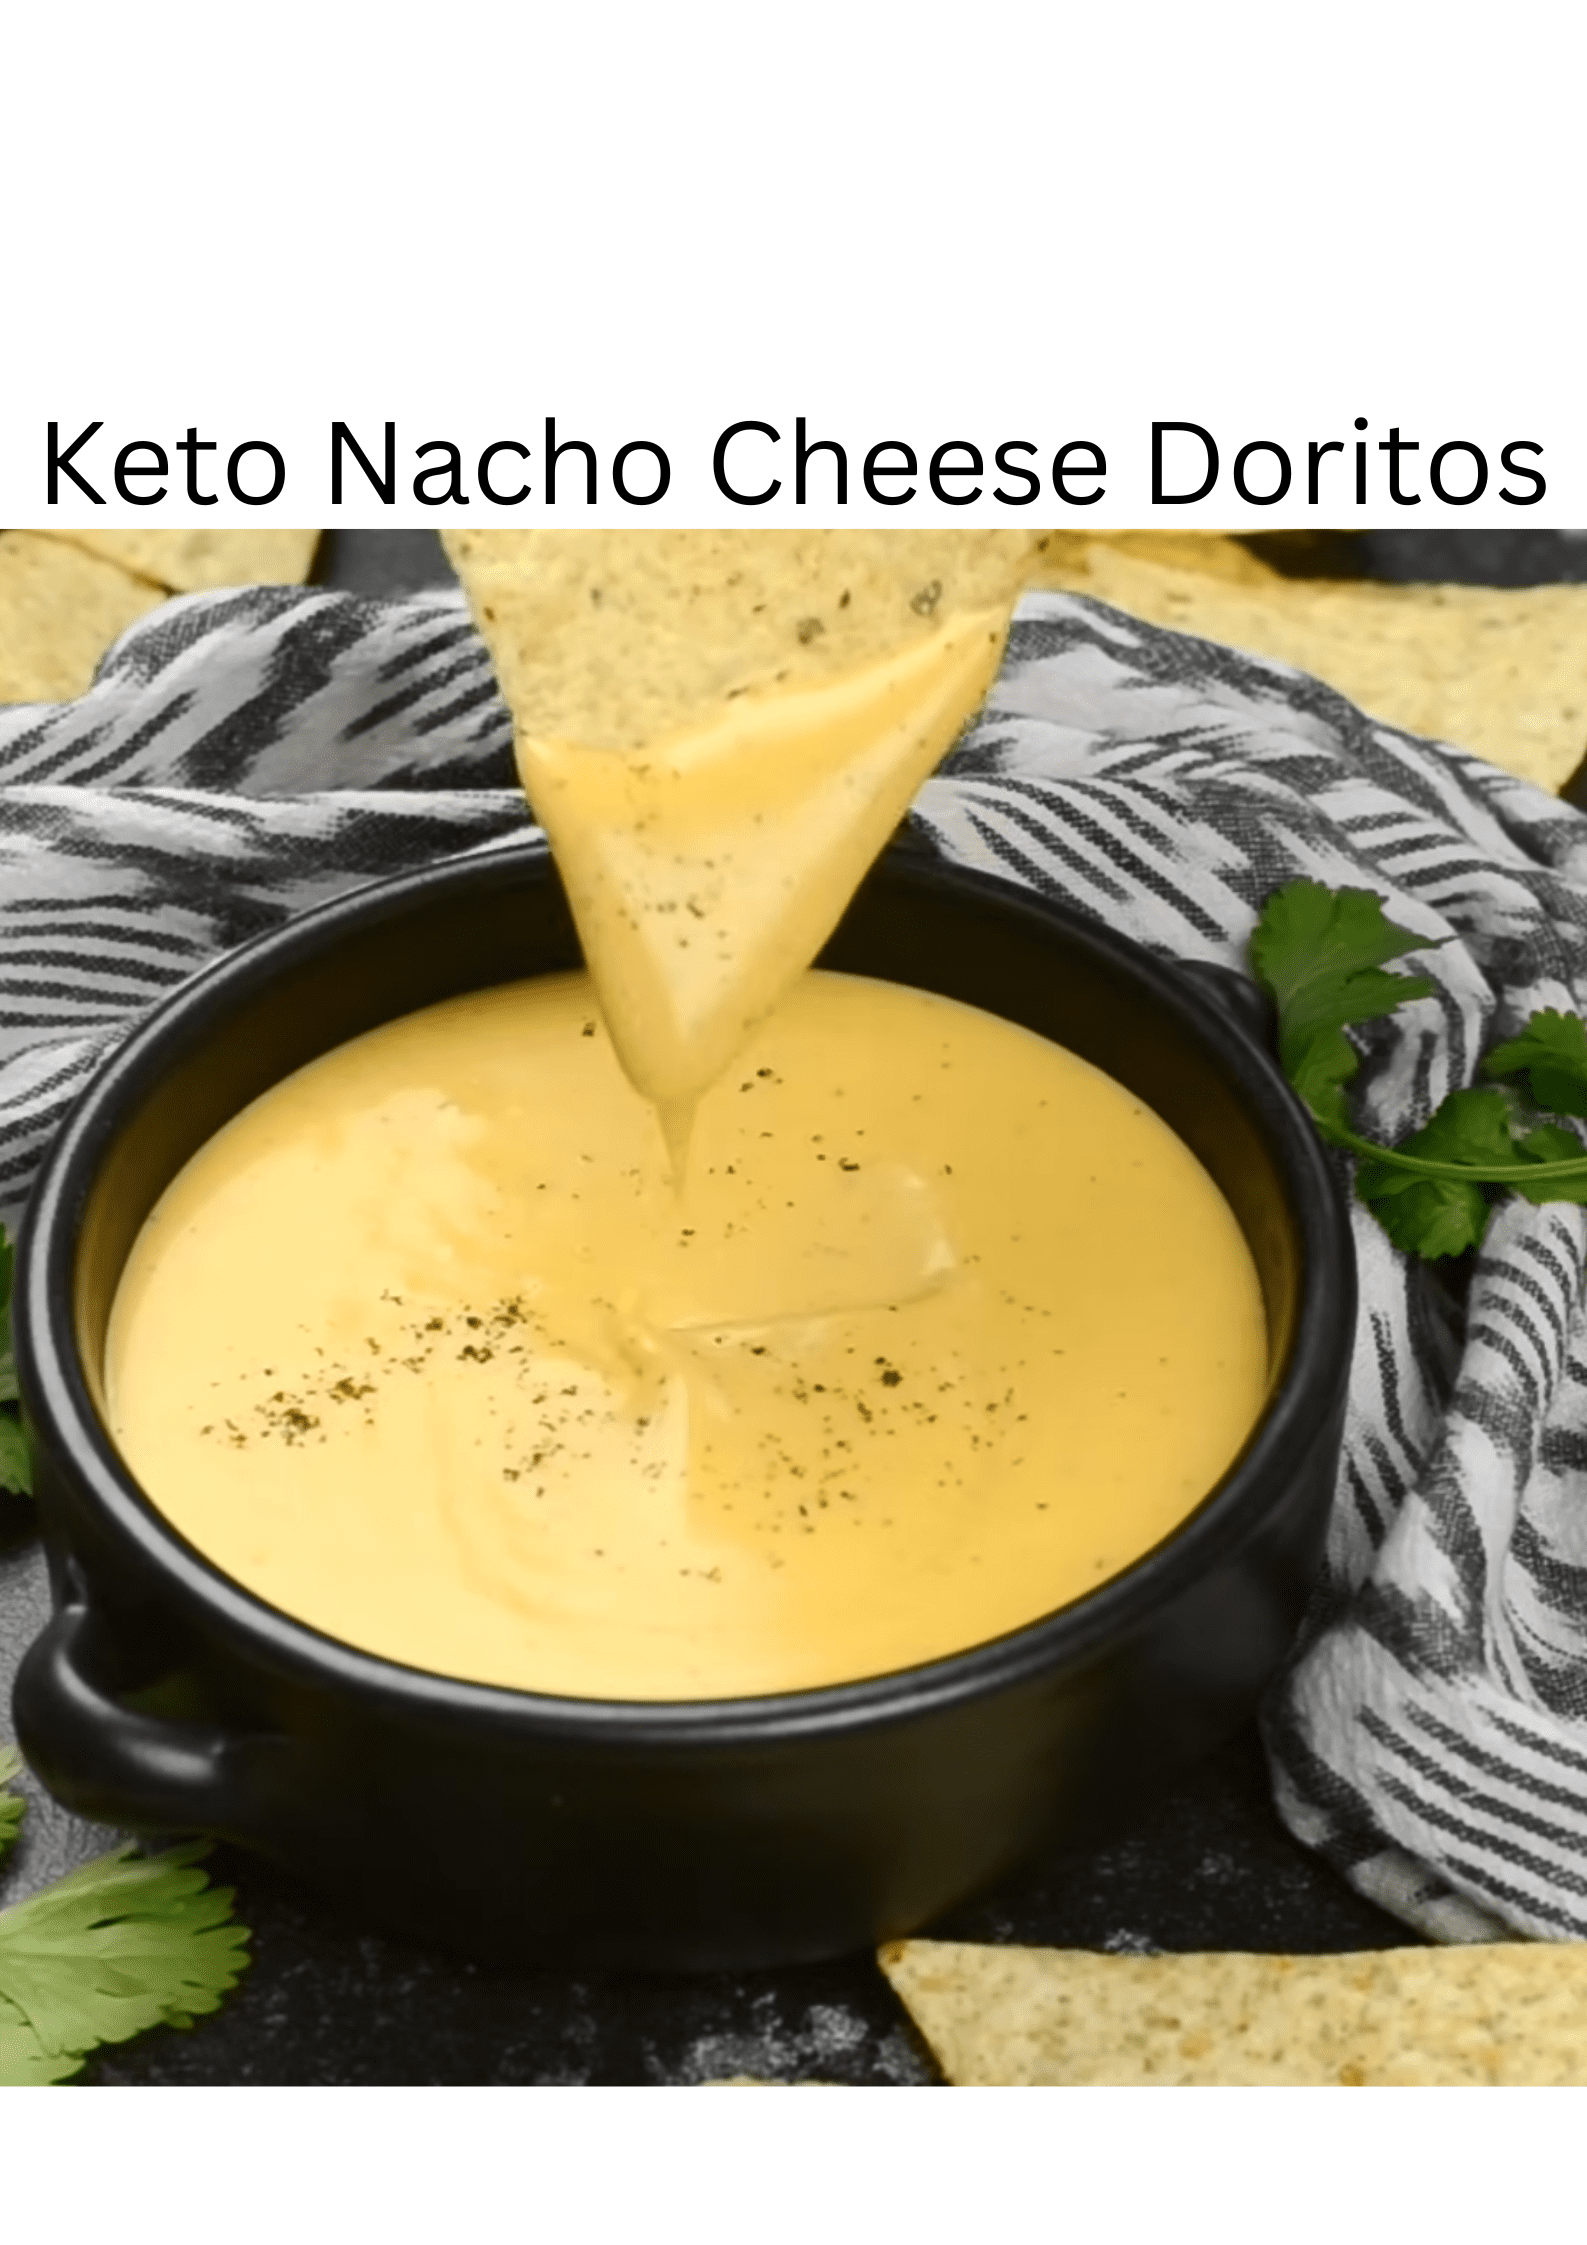 Keto Nacho Cheese Doritos